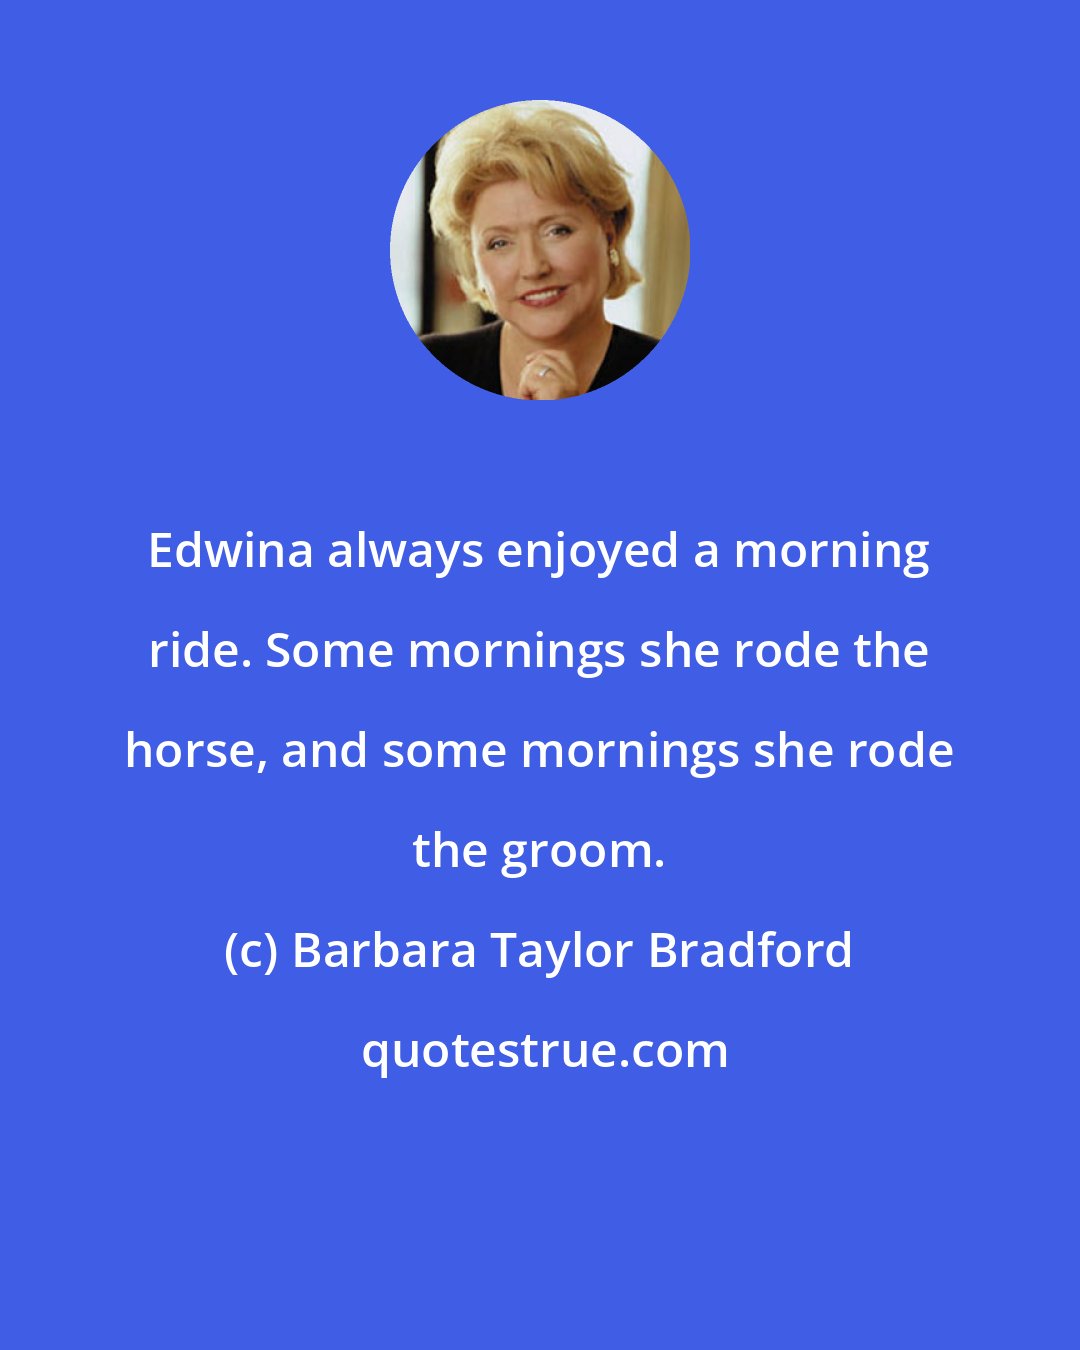 Barbara Taylor Bradford: Edwina always enjoyed a morning ride. Some mornings she rode the horse, and some mornings she rode the groom.